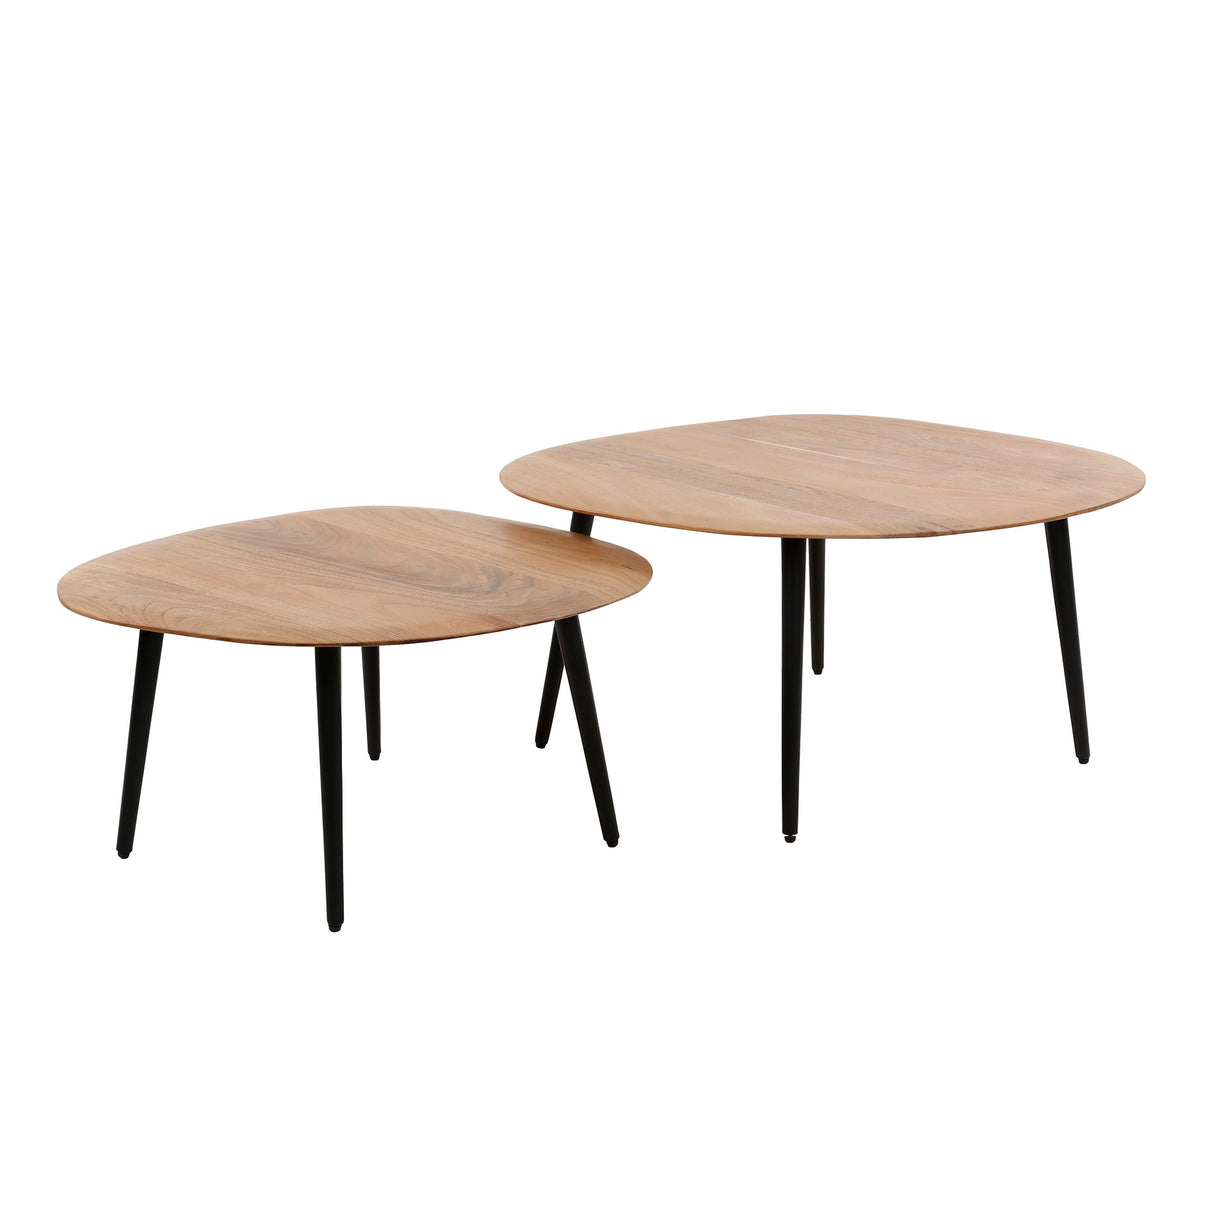 Organic coffee table Elvie set of 2 pebble -shaped acacia wood